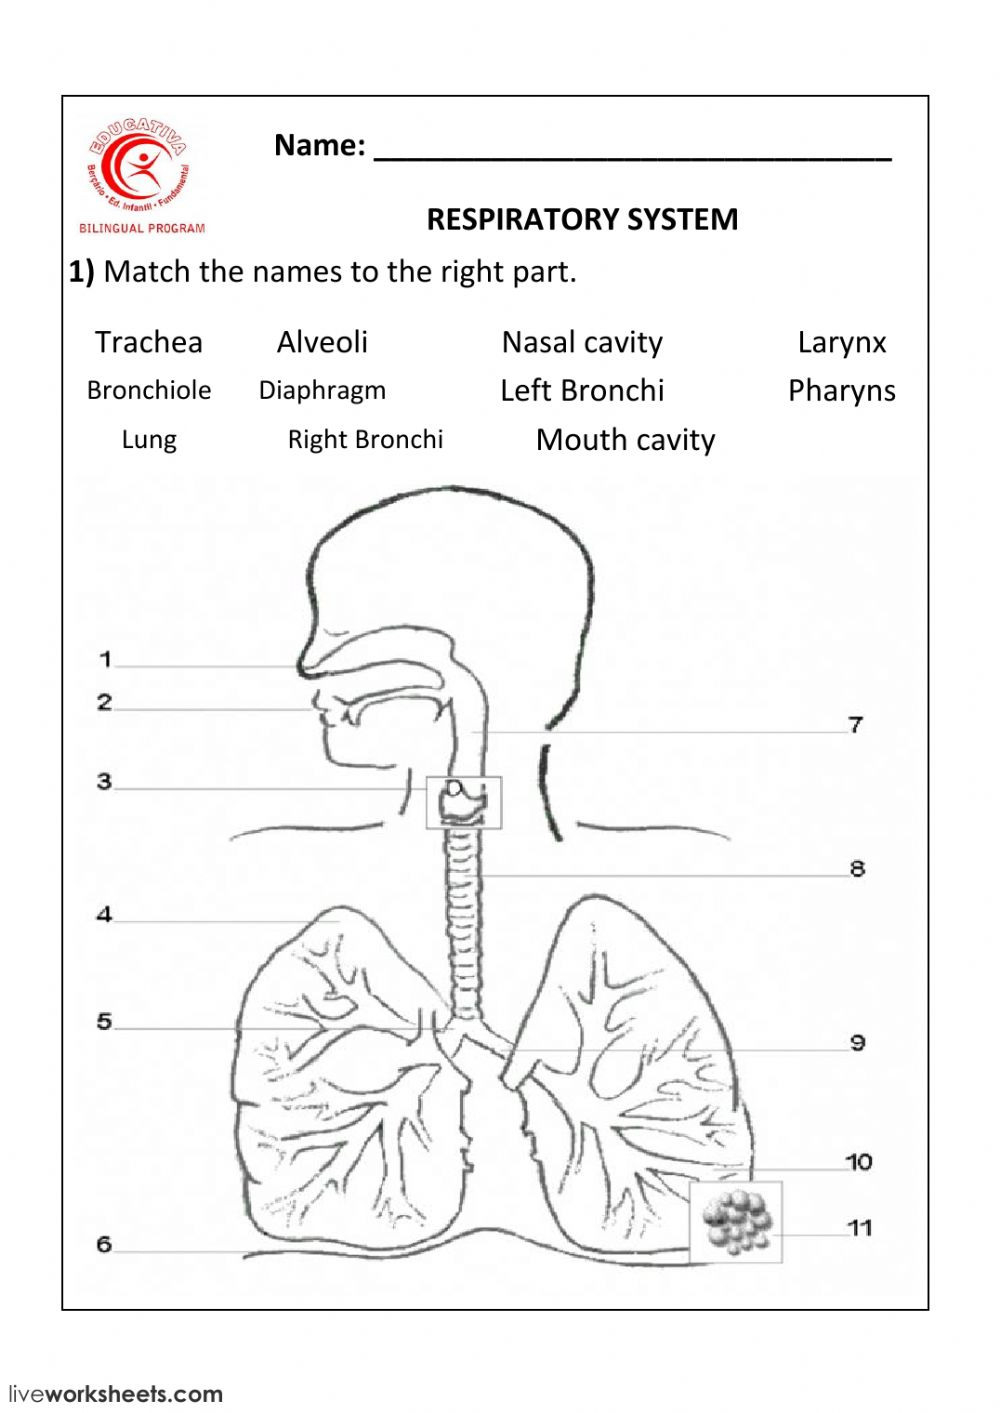 respiratory-system-worksheet-db-excel